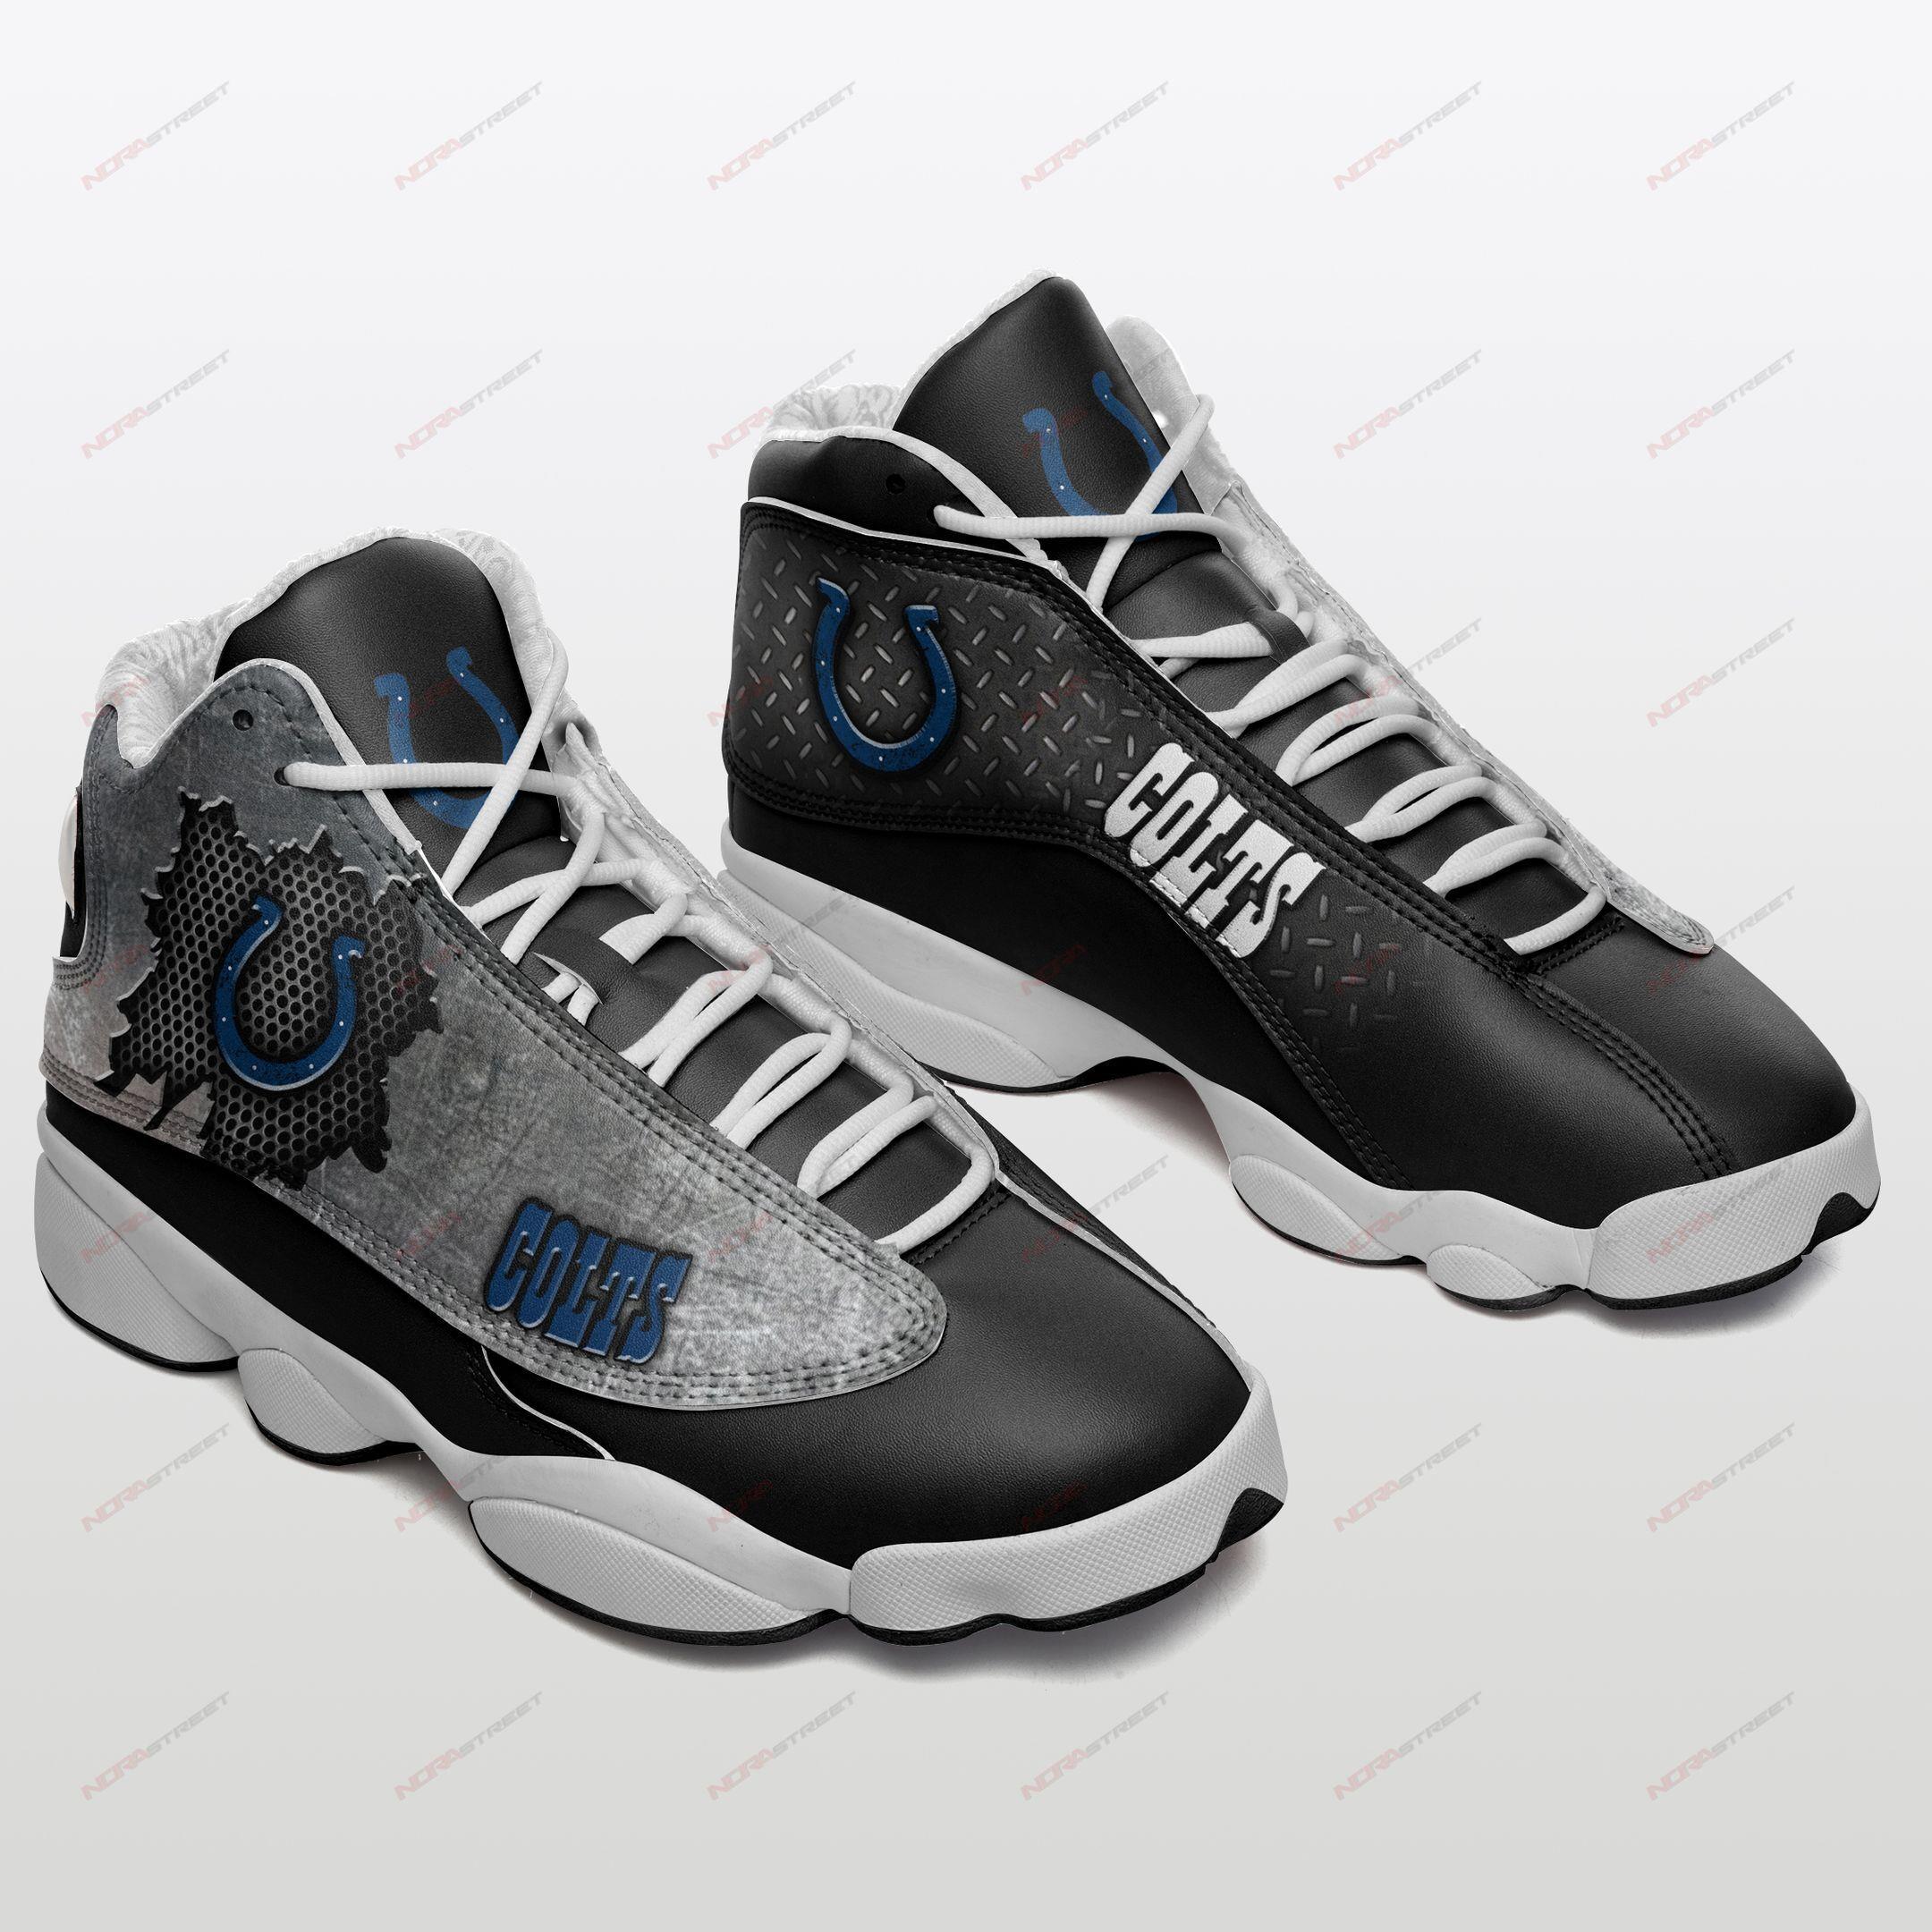 Indianapolis Colts Air Jordan 13 Sneakers Sport Shoes